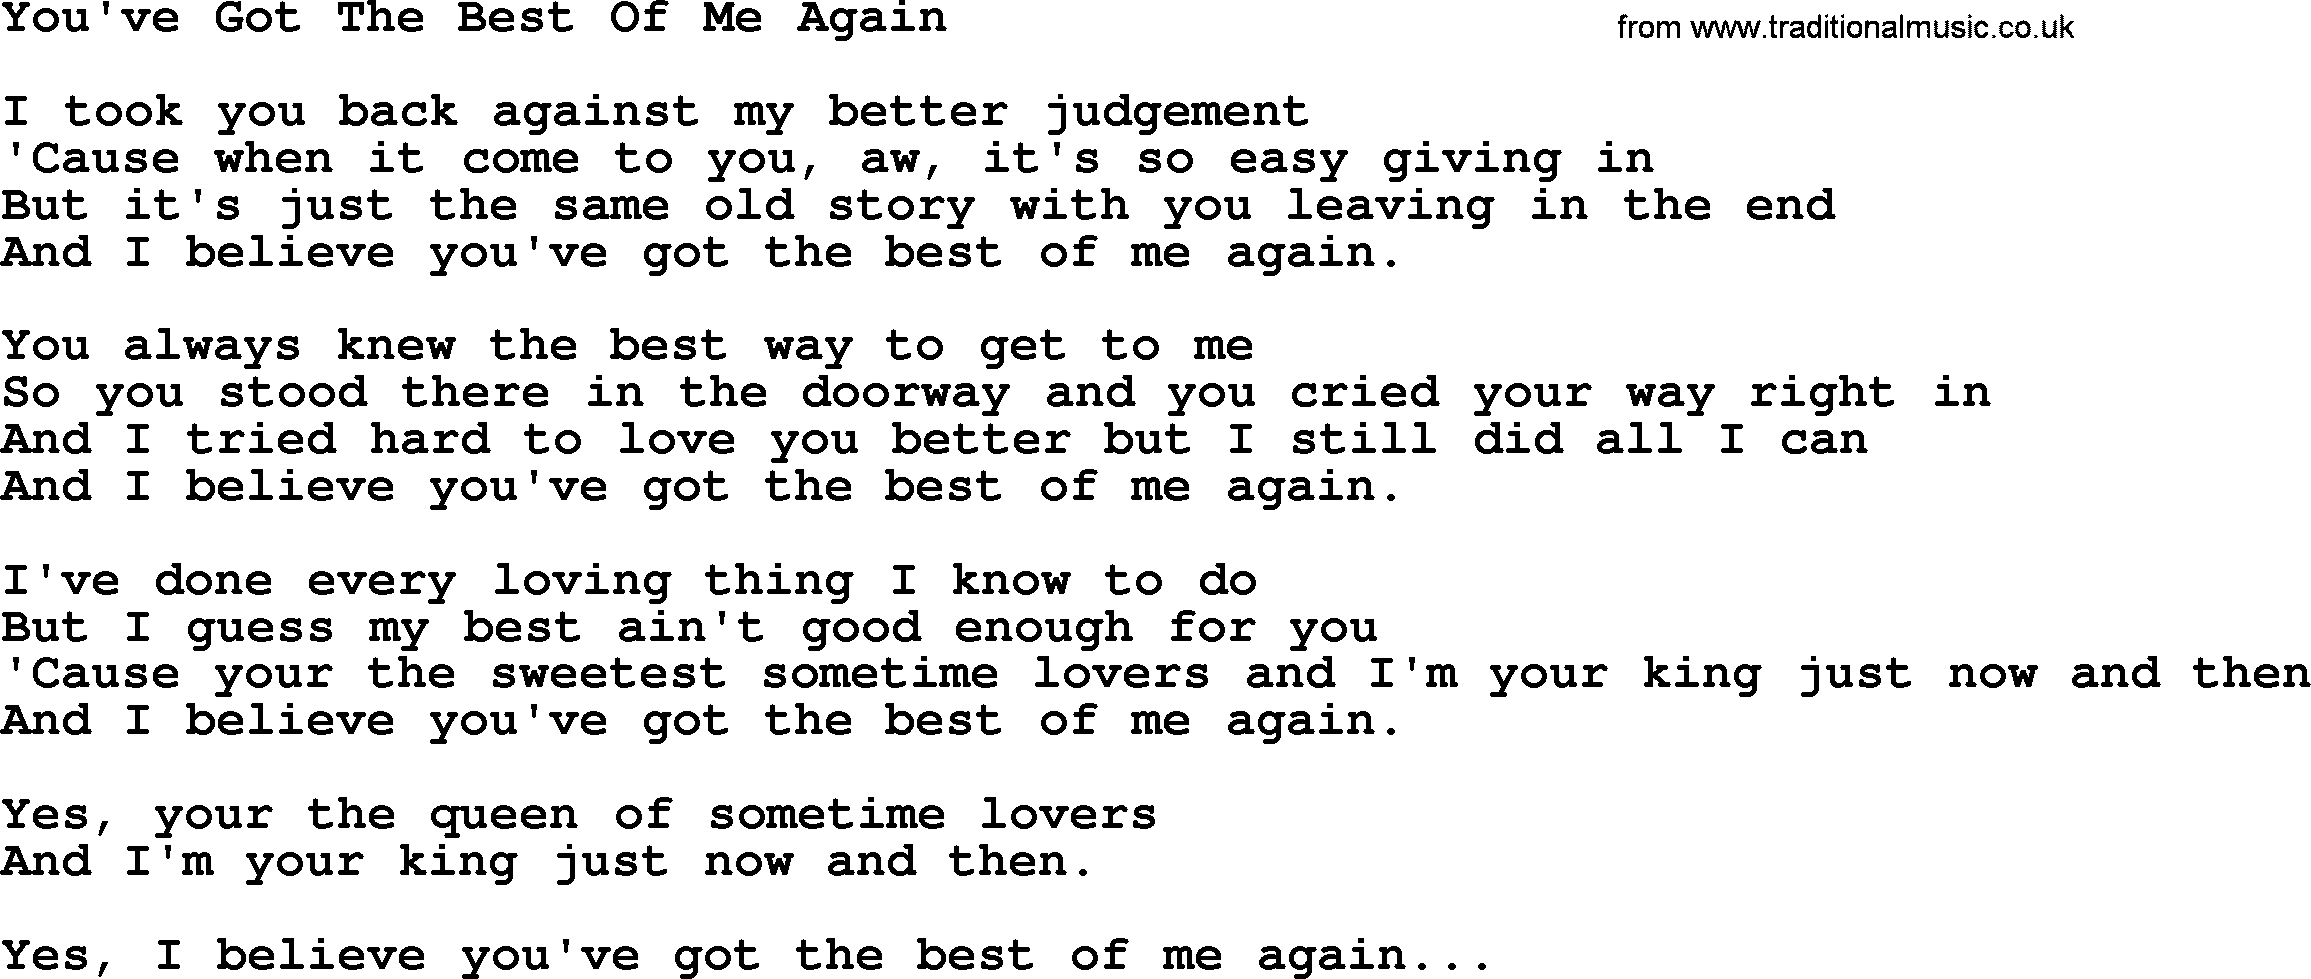 George Jones song: You've Got The Best Of Me Again, lyrics